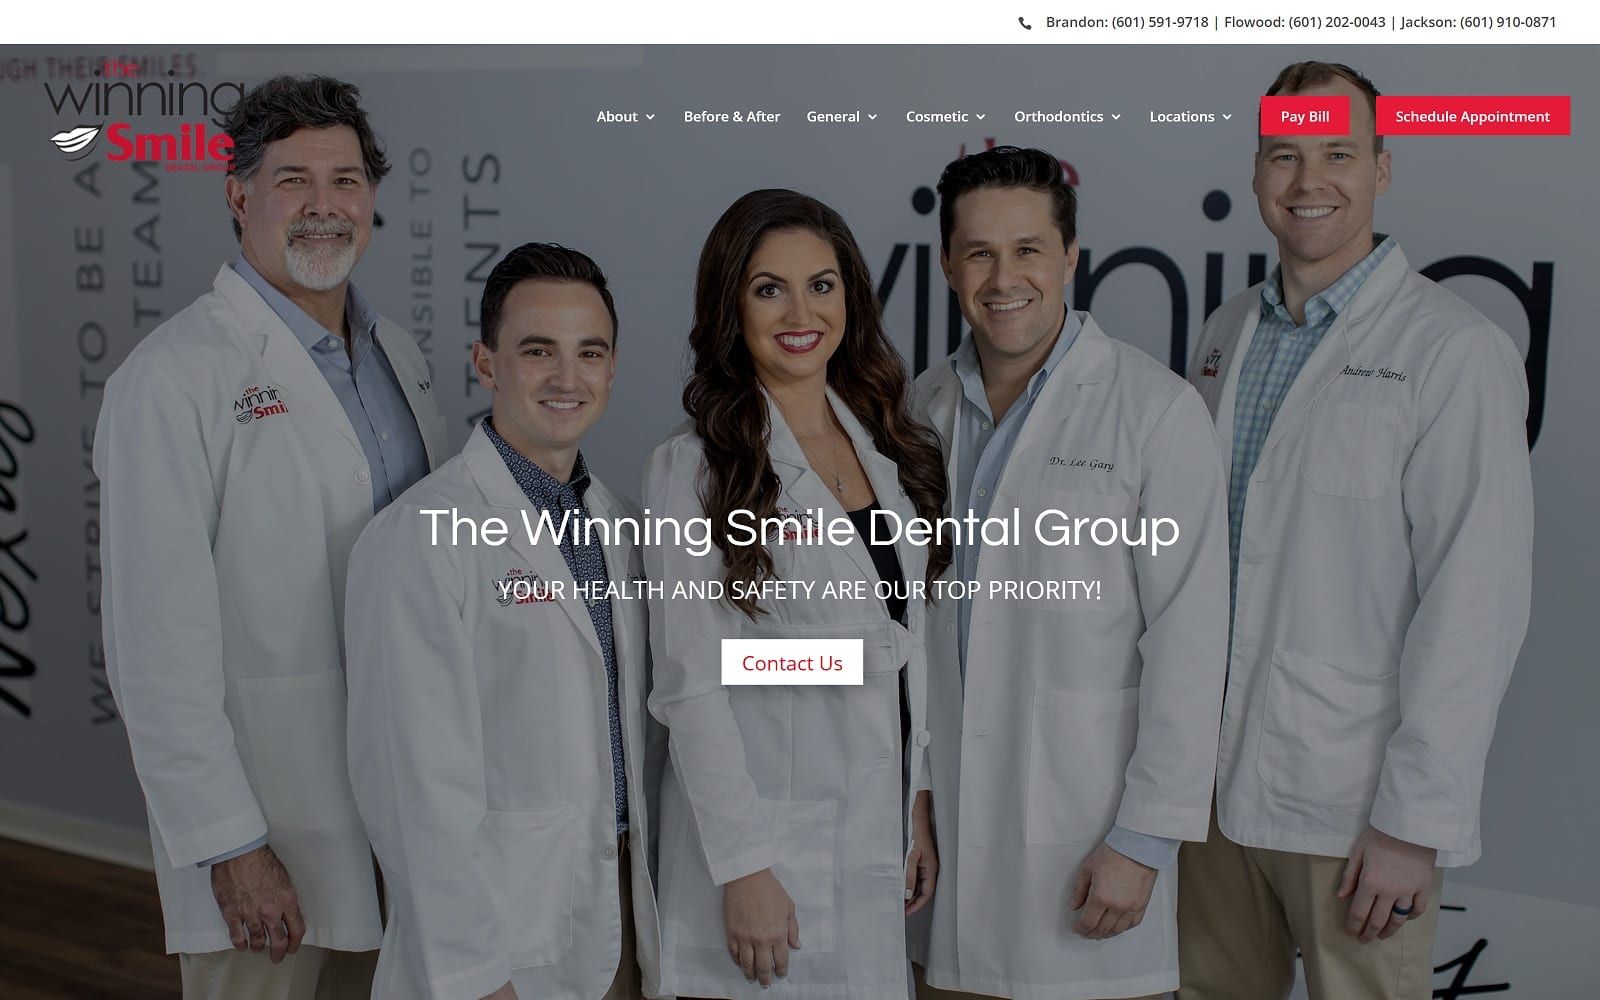 The screenshot of the winning smile dental group - jackson thewinningsmile. Com website